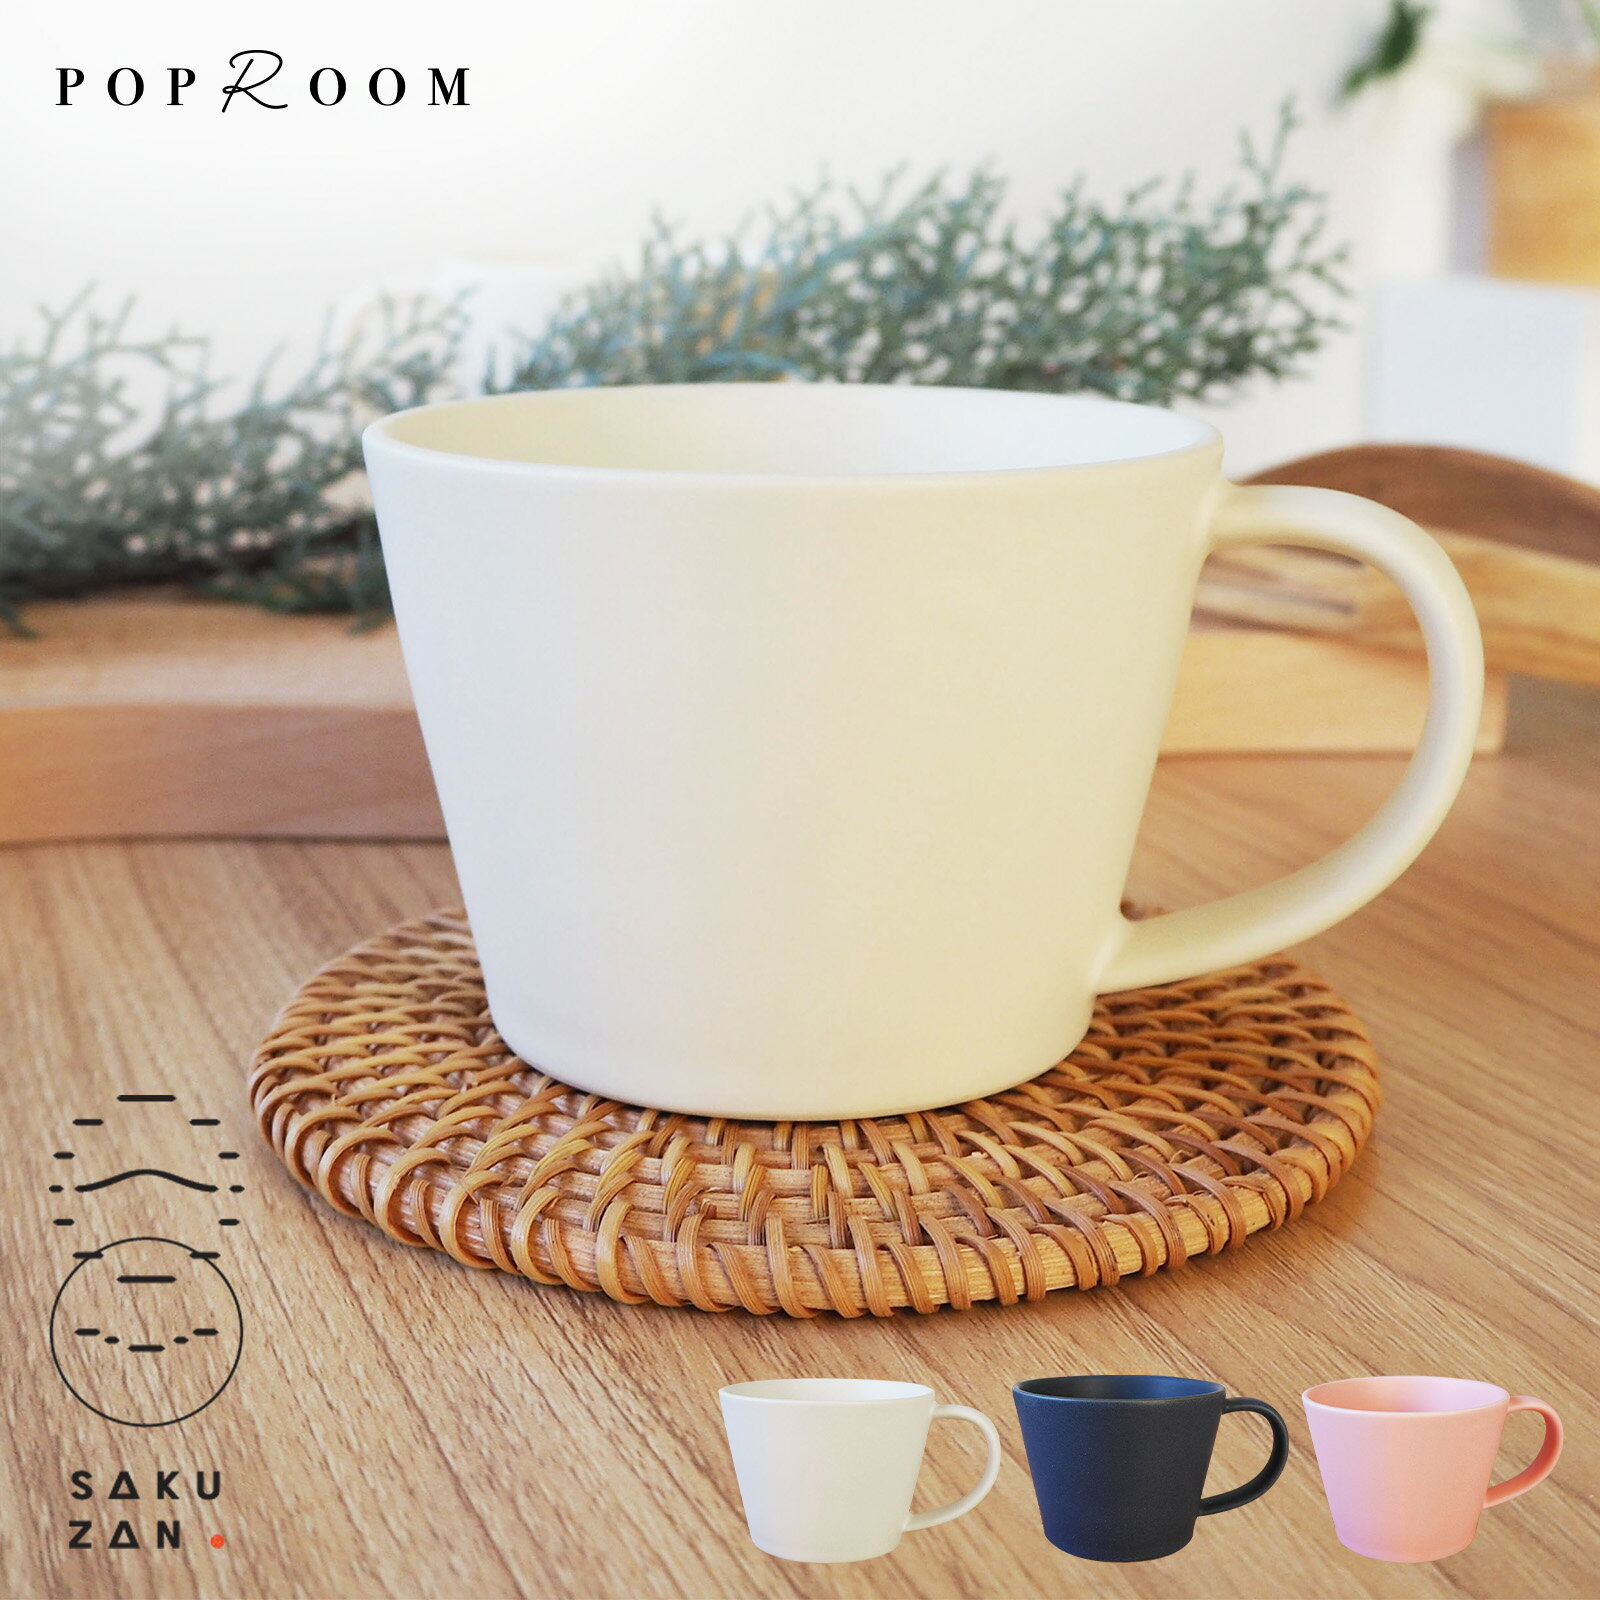 SAKUZAN Sara コーヒーカップ  おしゃれ 北欧 韓国 作山窯 日本製 マグカップ 大きい かわいい コップ カフェ お茶 食器 食卓 磁器